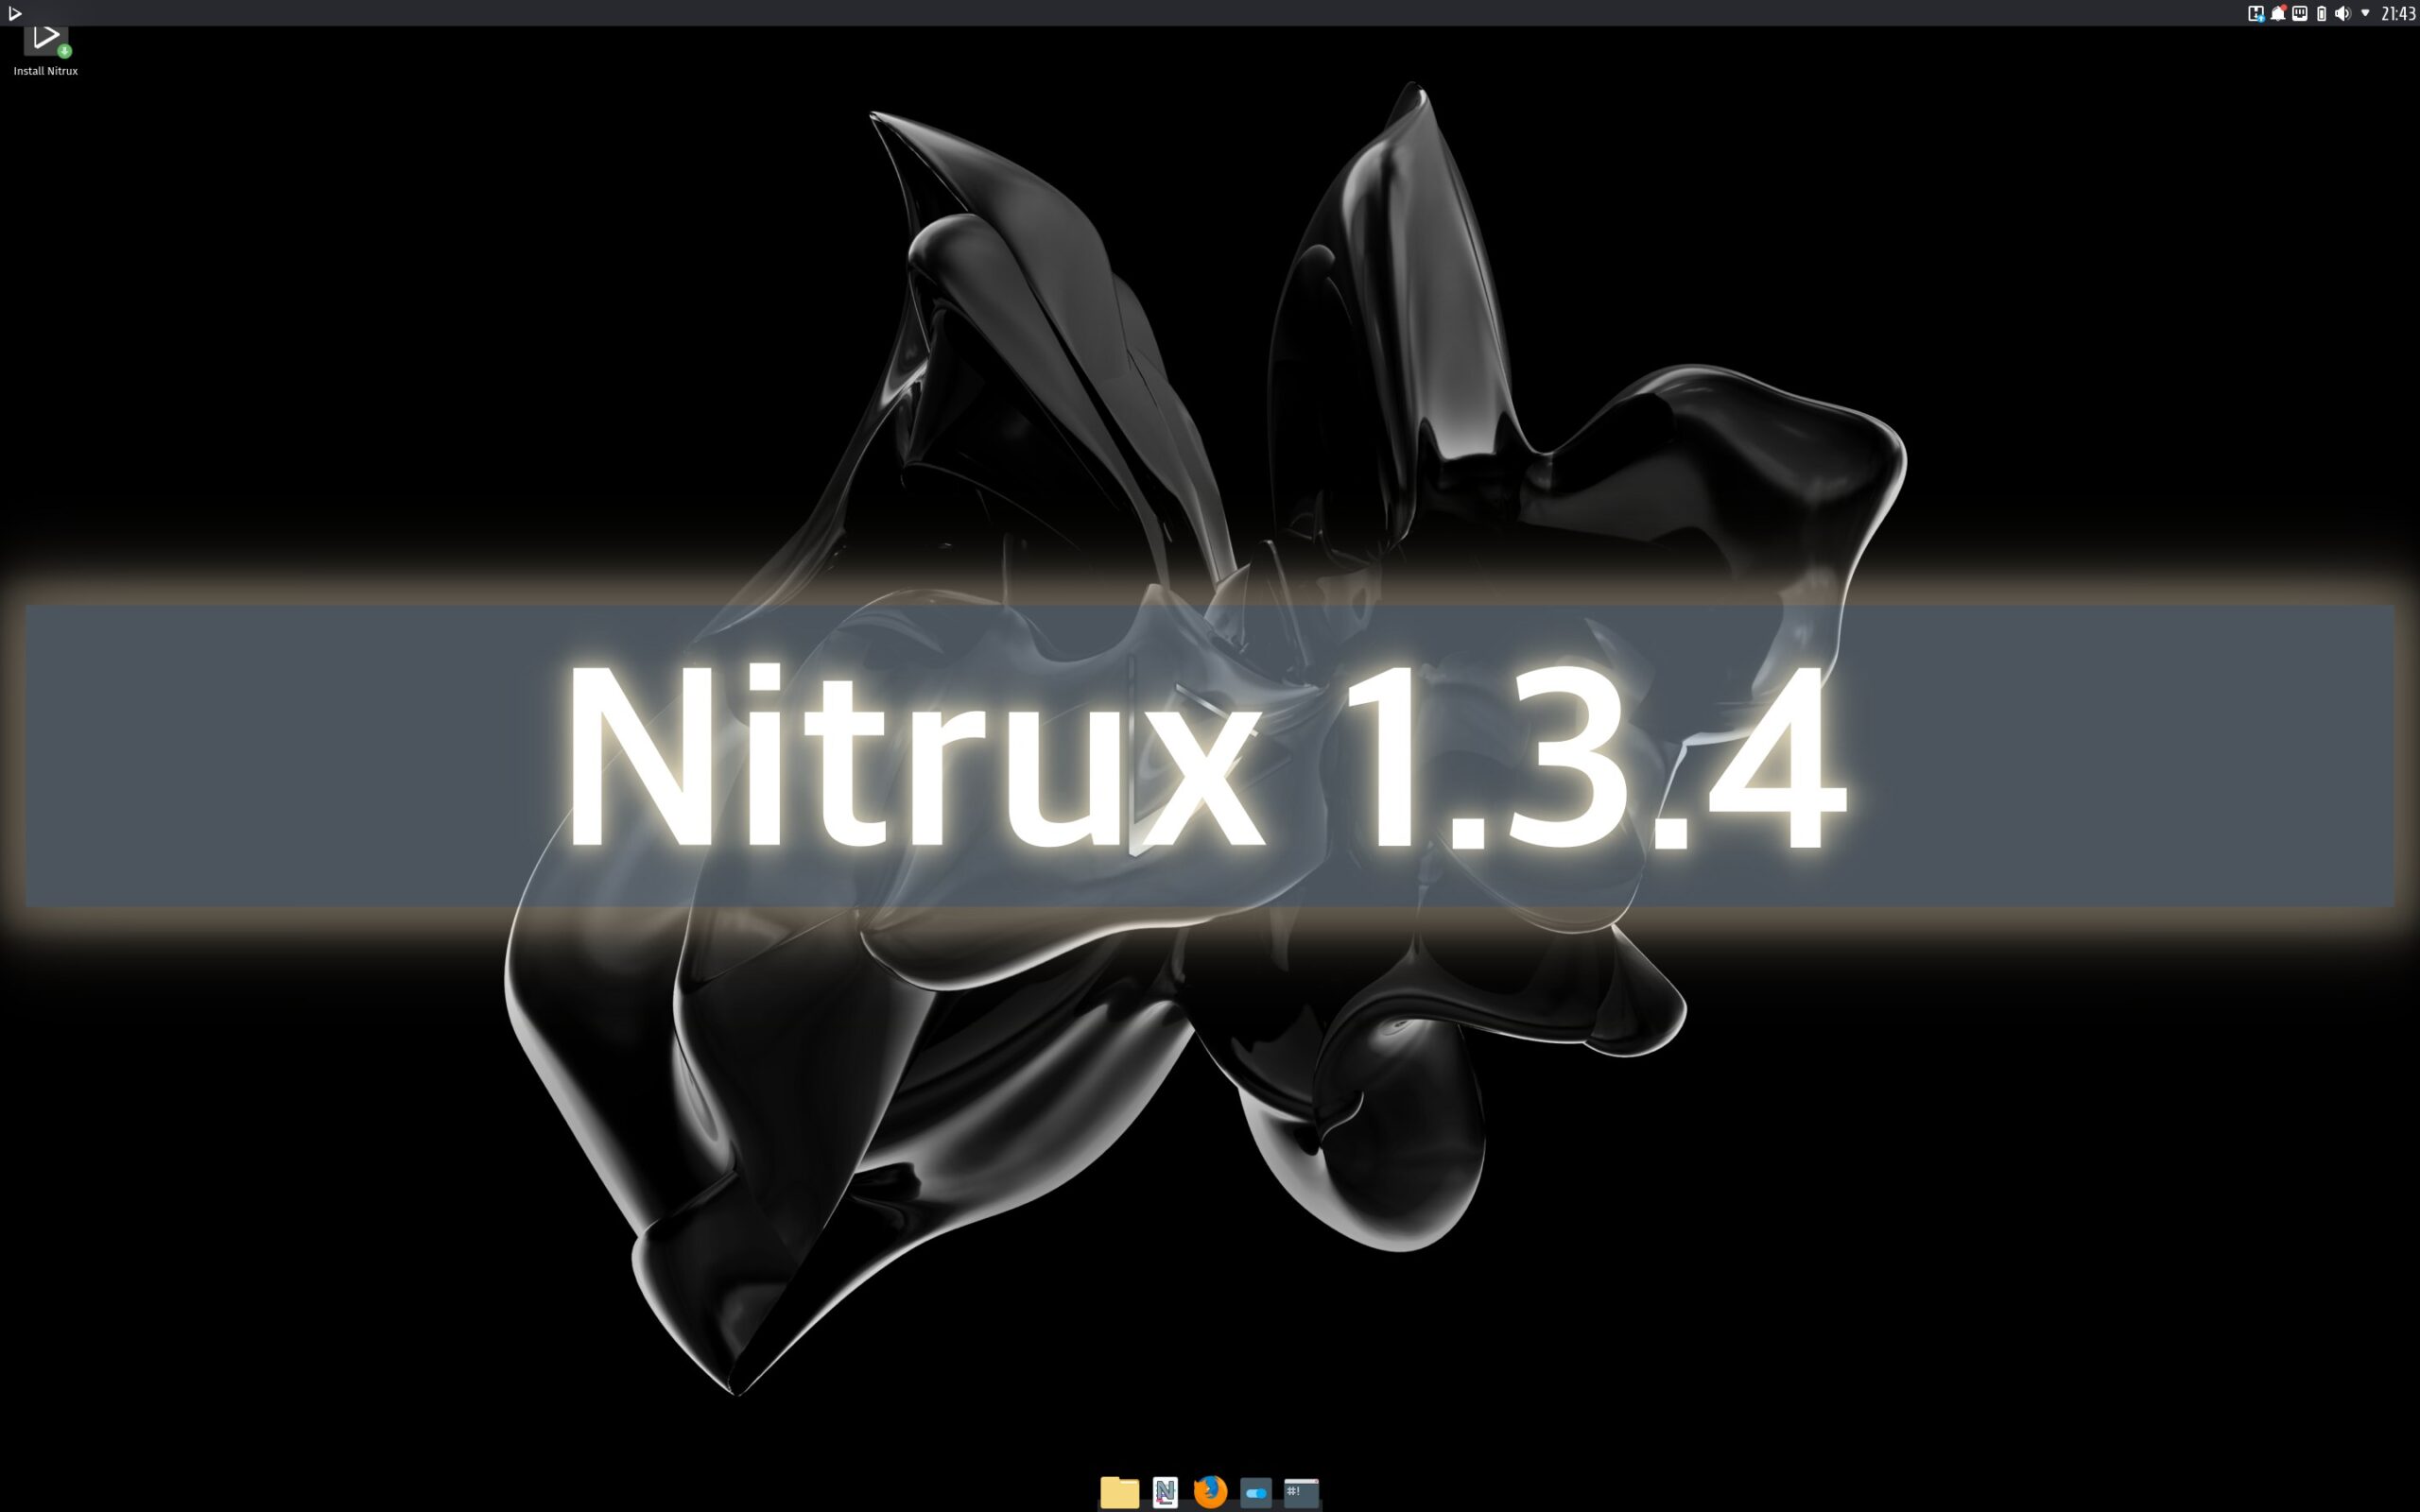 Nitrux 1.3.4 Switches to KDE Plasma 5.20 Desktop, Offers Support for Linux Kernel 5.9